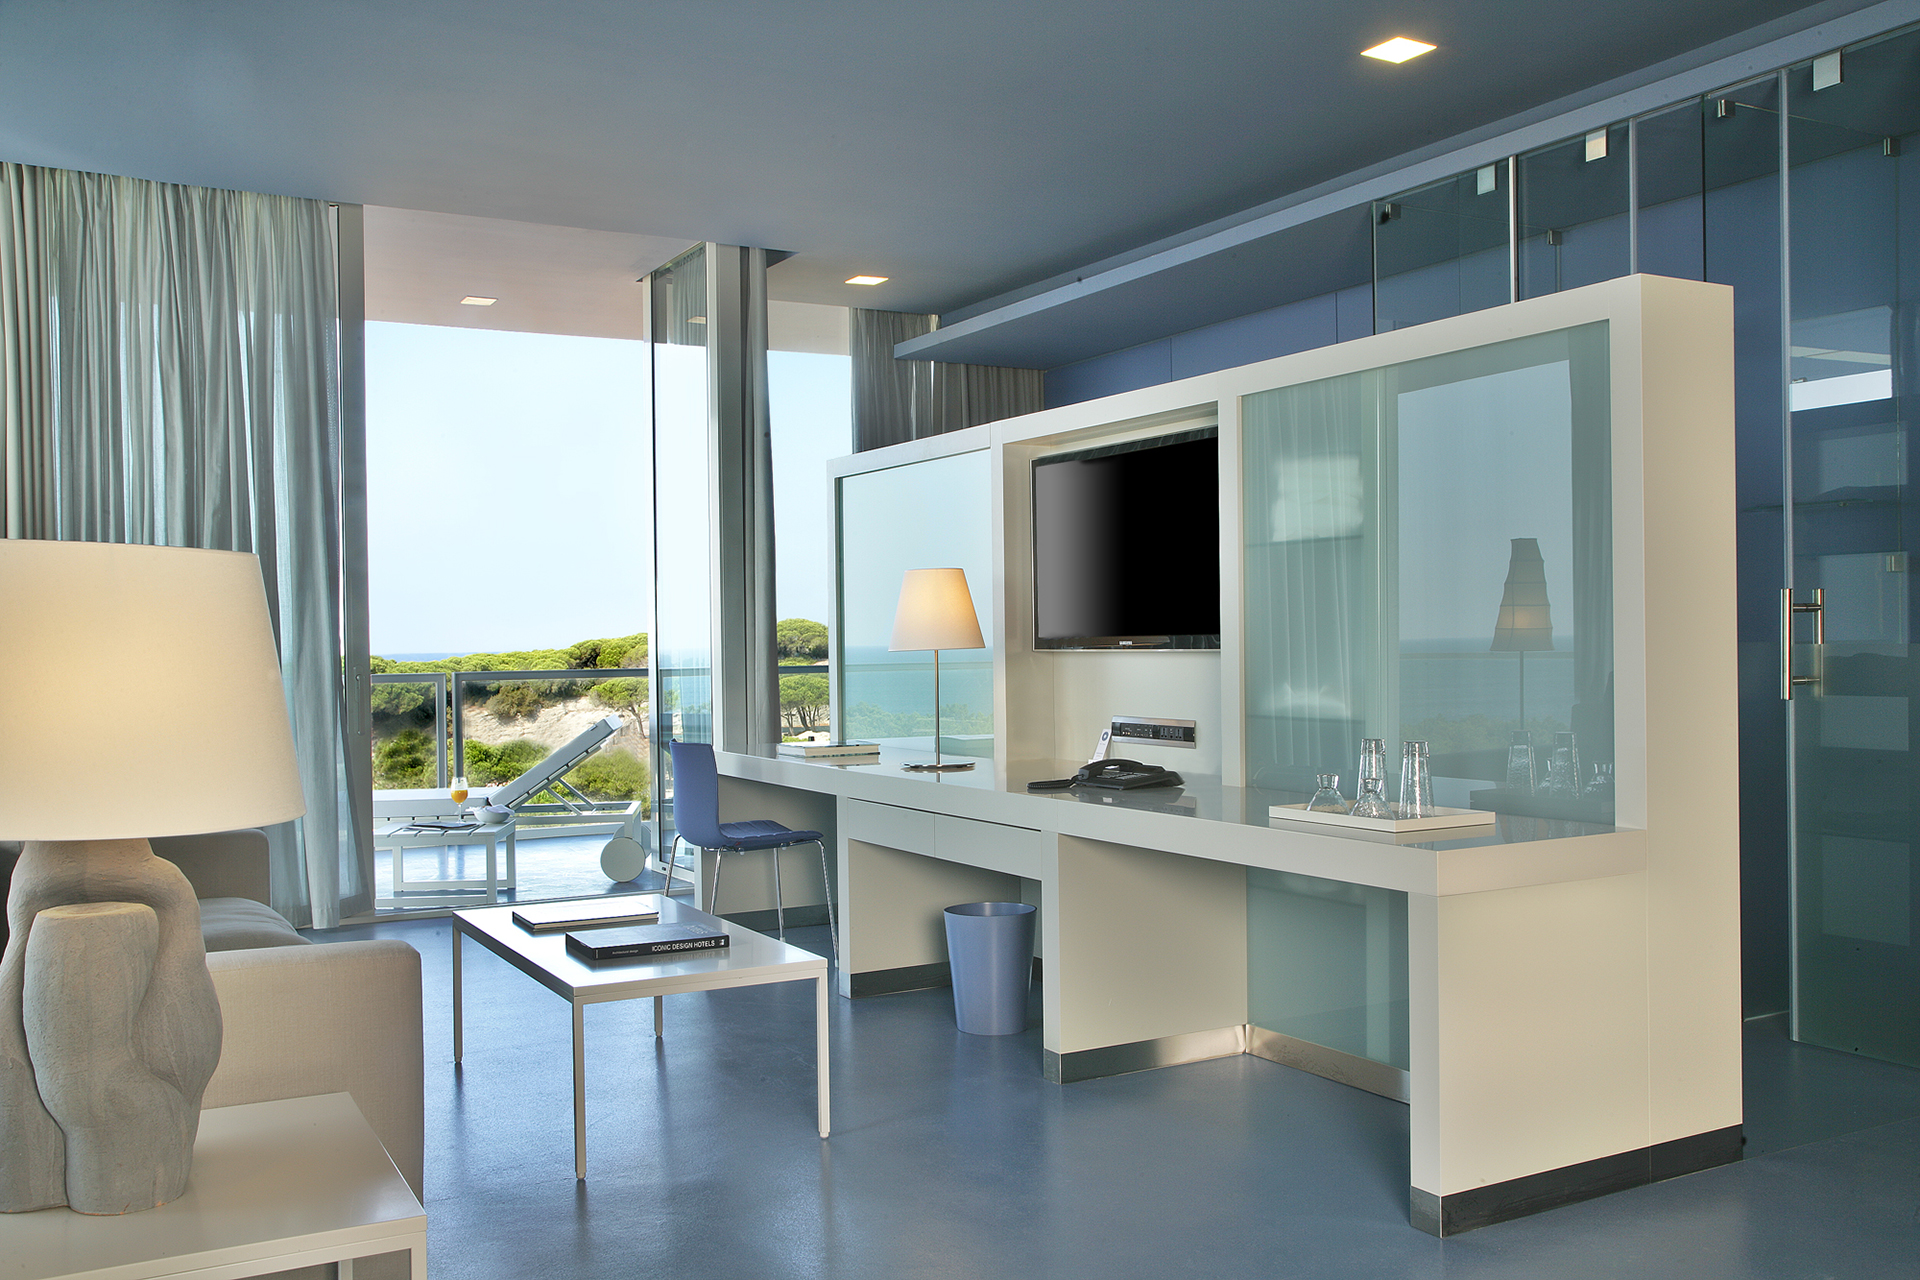 Golf-expedition-golfreizen-golfresort-Royal-The-Oitavos-Hotel-appartement-living-room